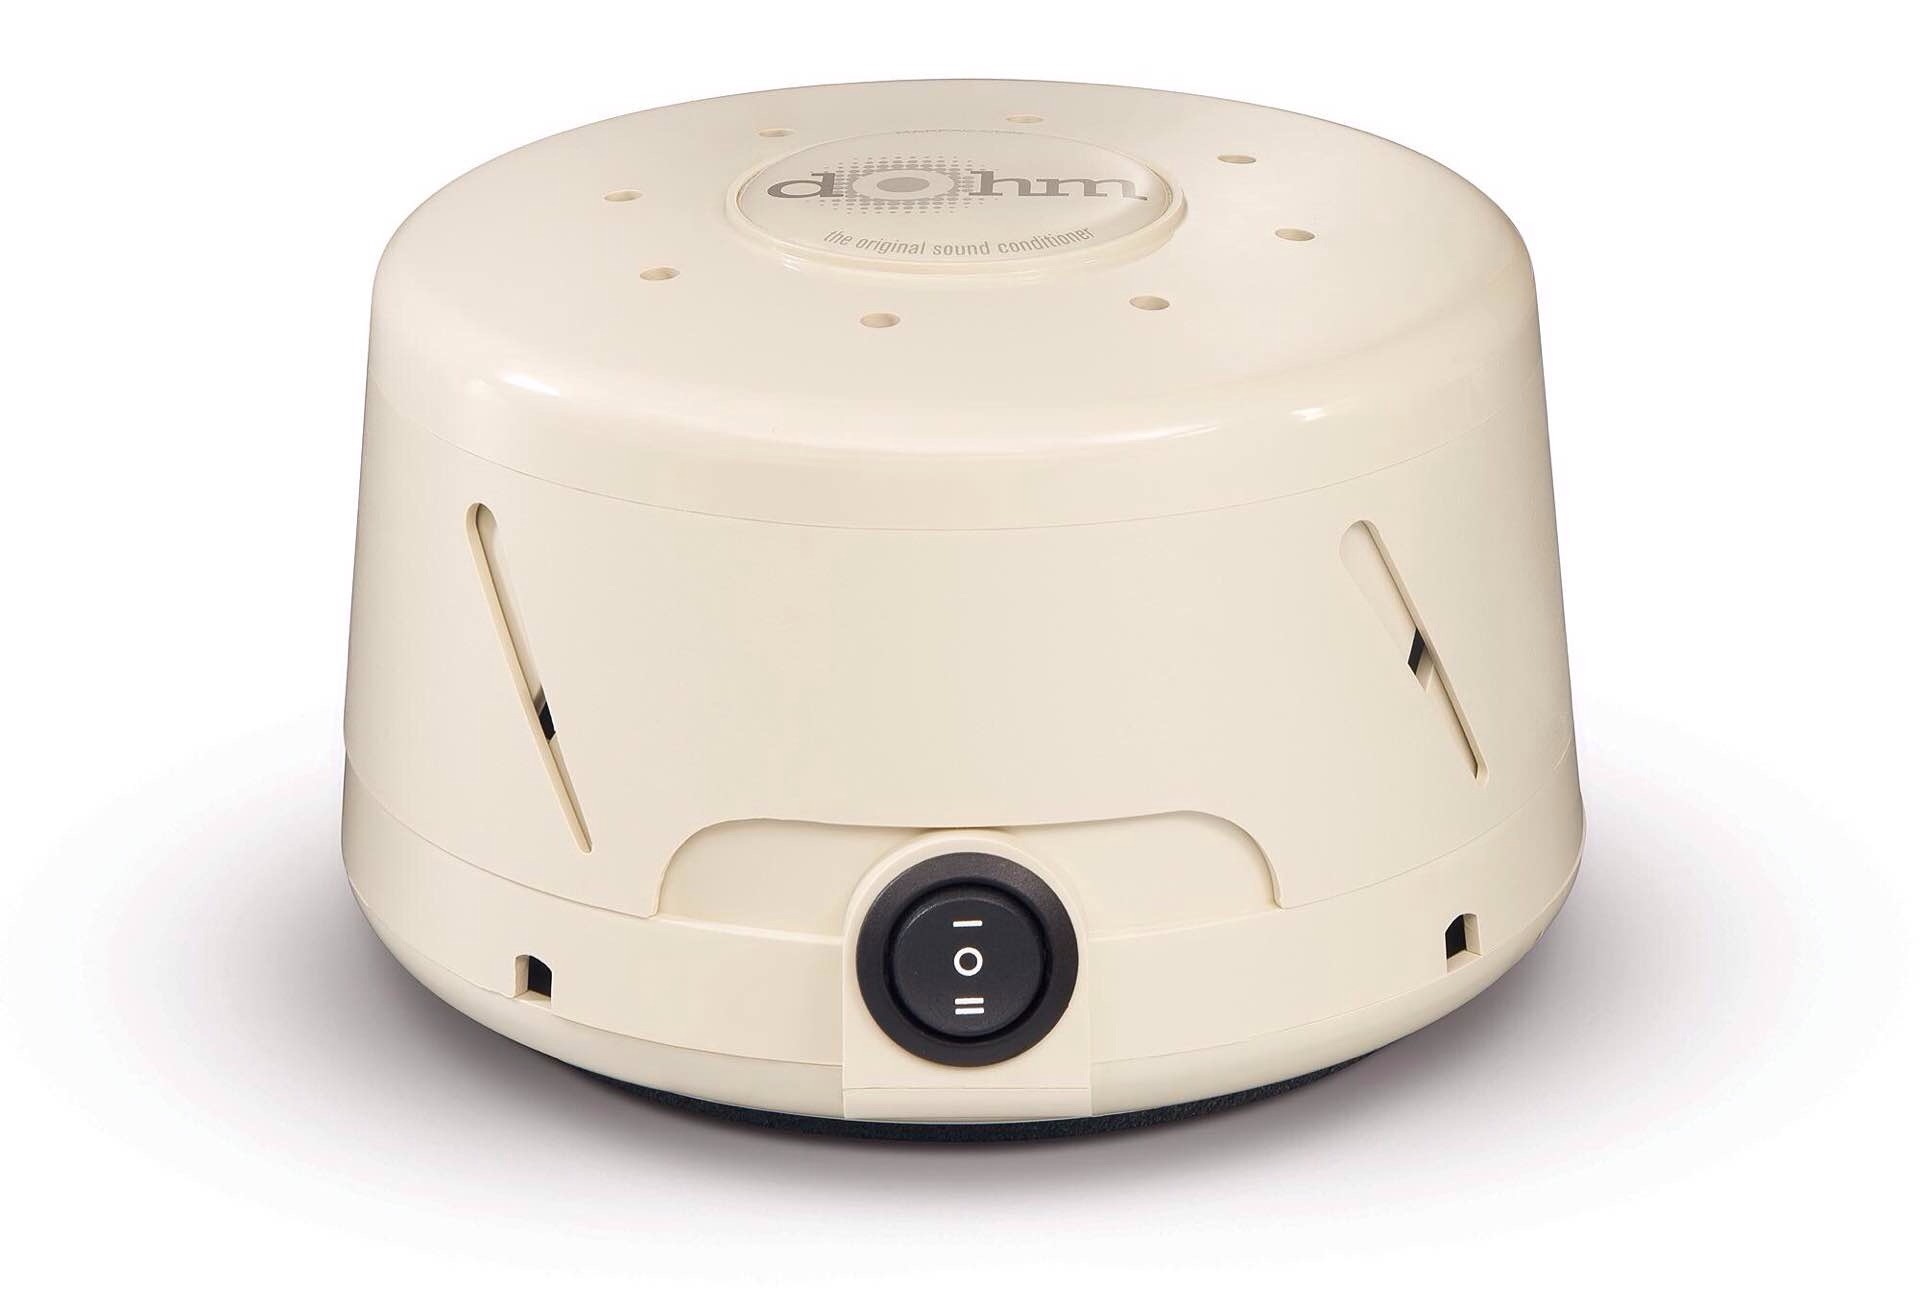 The Marpac DOHM-DS sound conditioner / white noise machine. ($50)